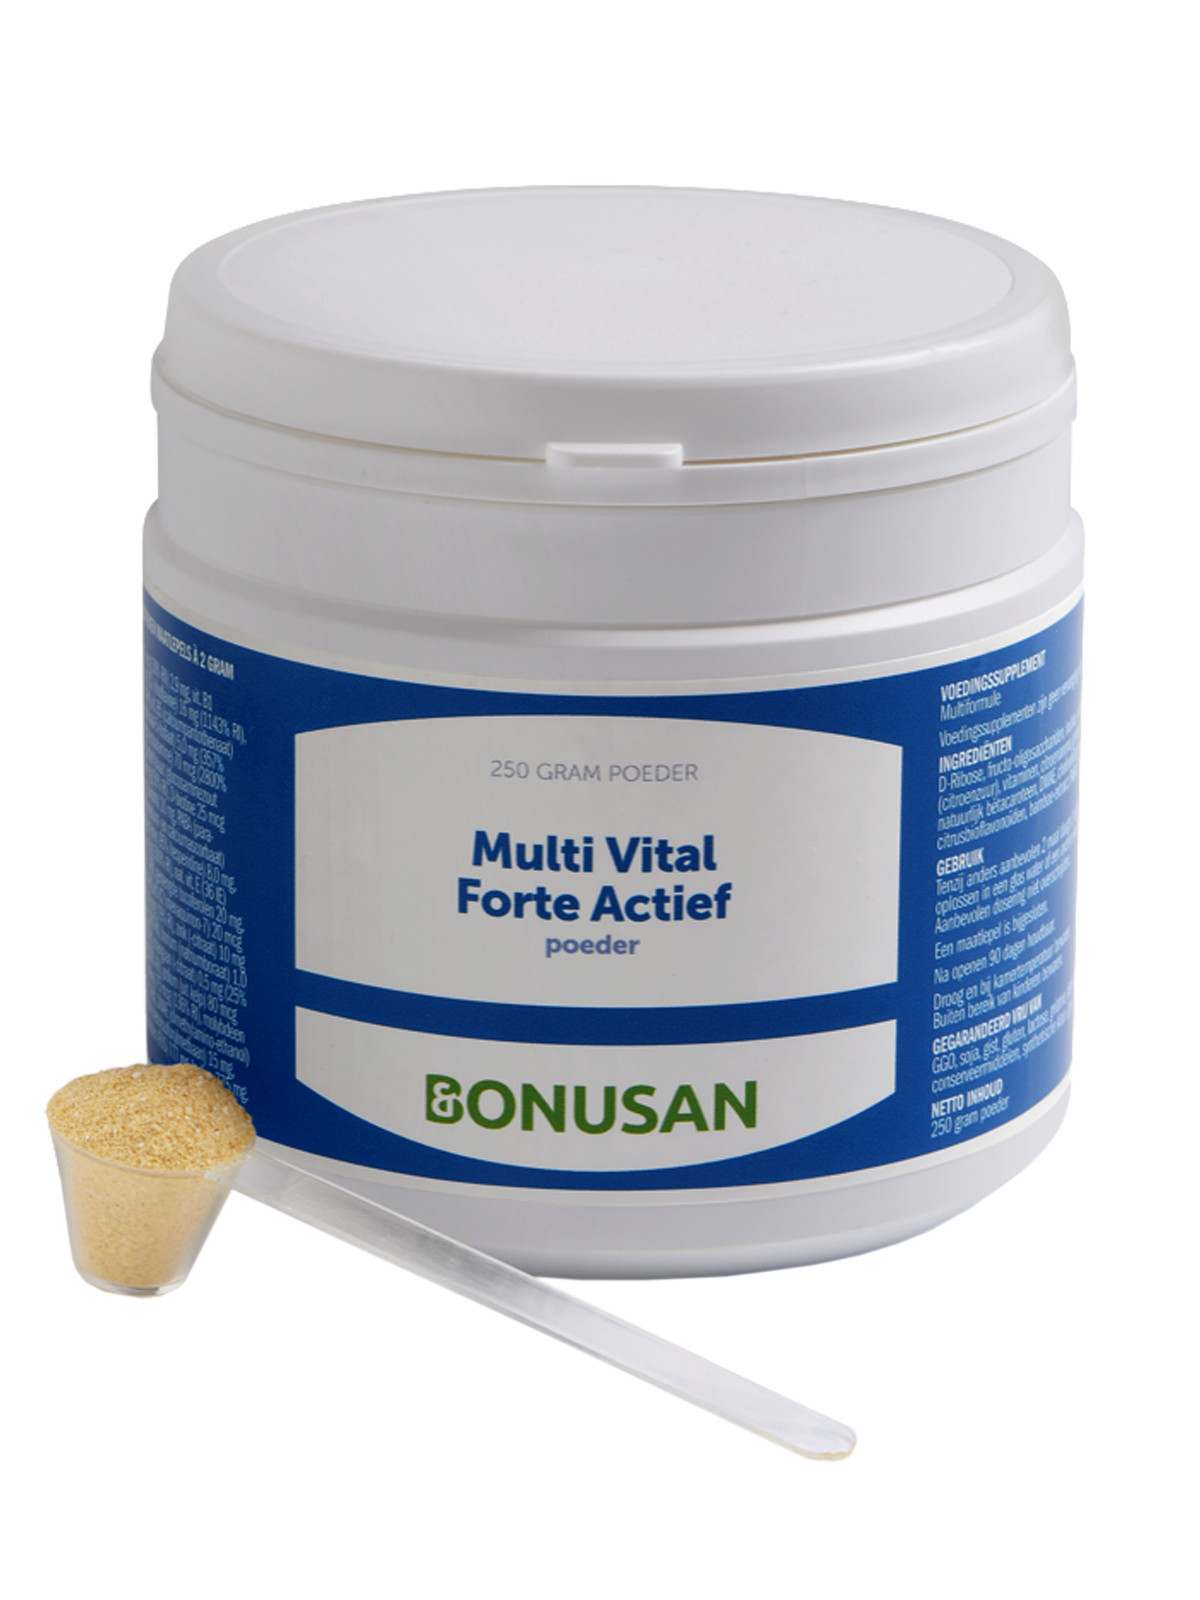 Bonusan - Multi Vital Forte Actief poeder